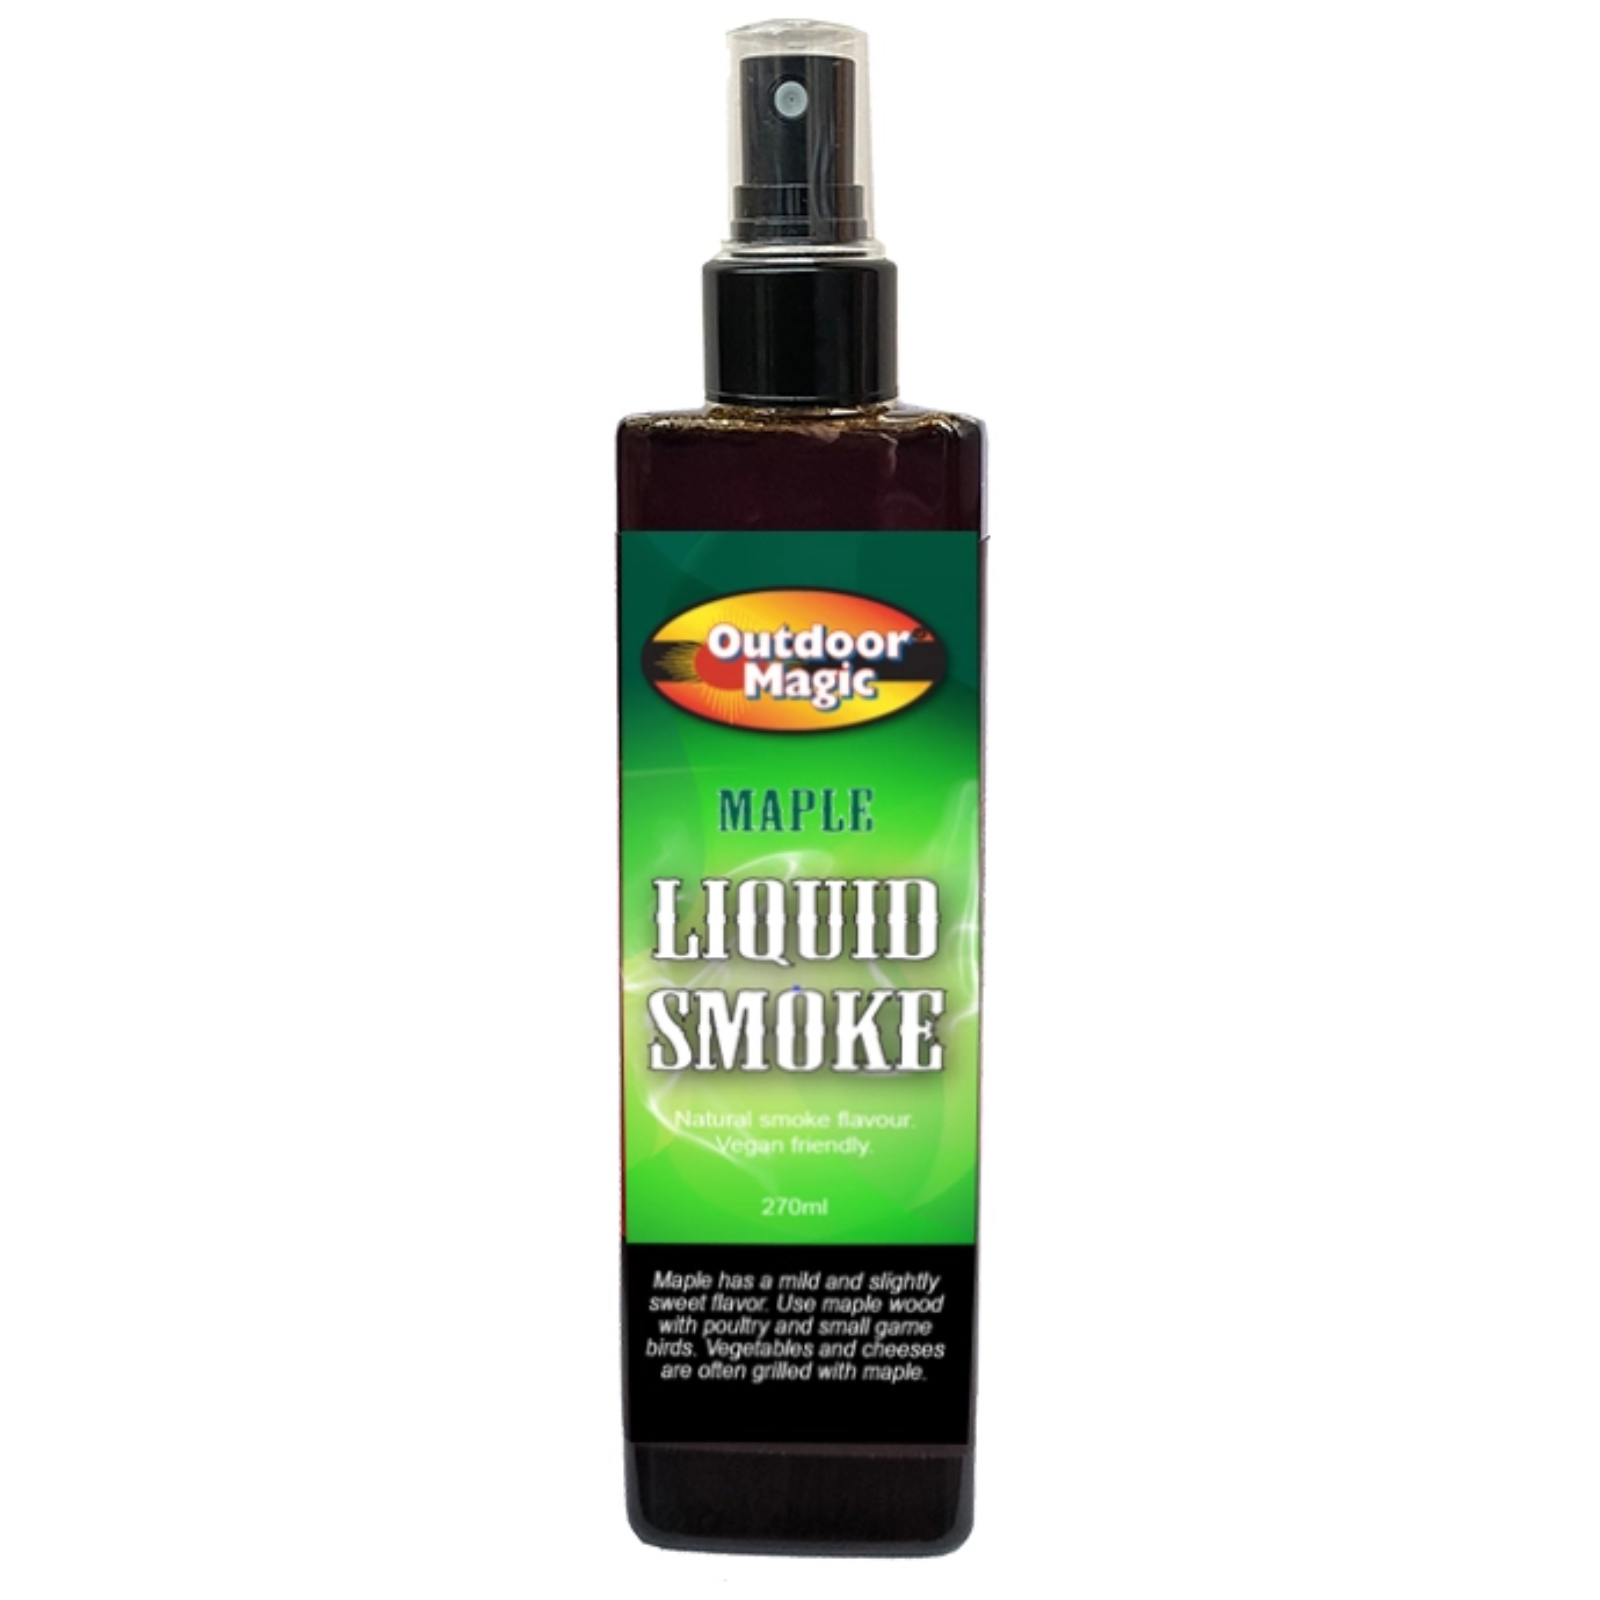 Outdoor Magic - Maple Liquid Smoke 270ml - LIQMAP